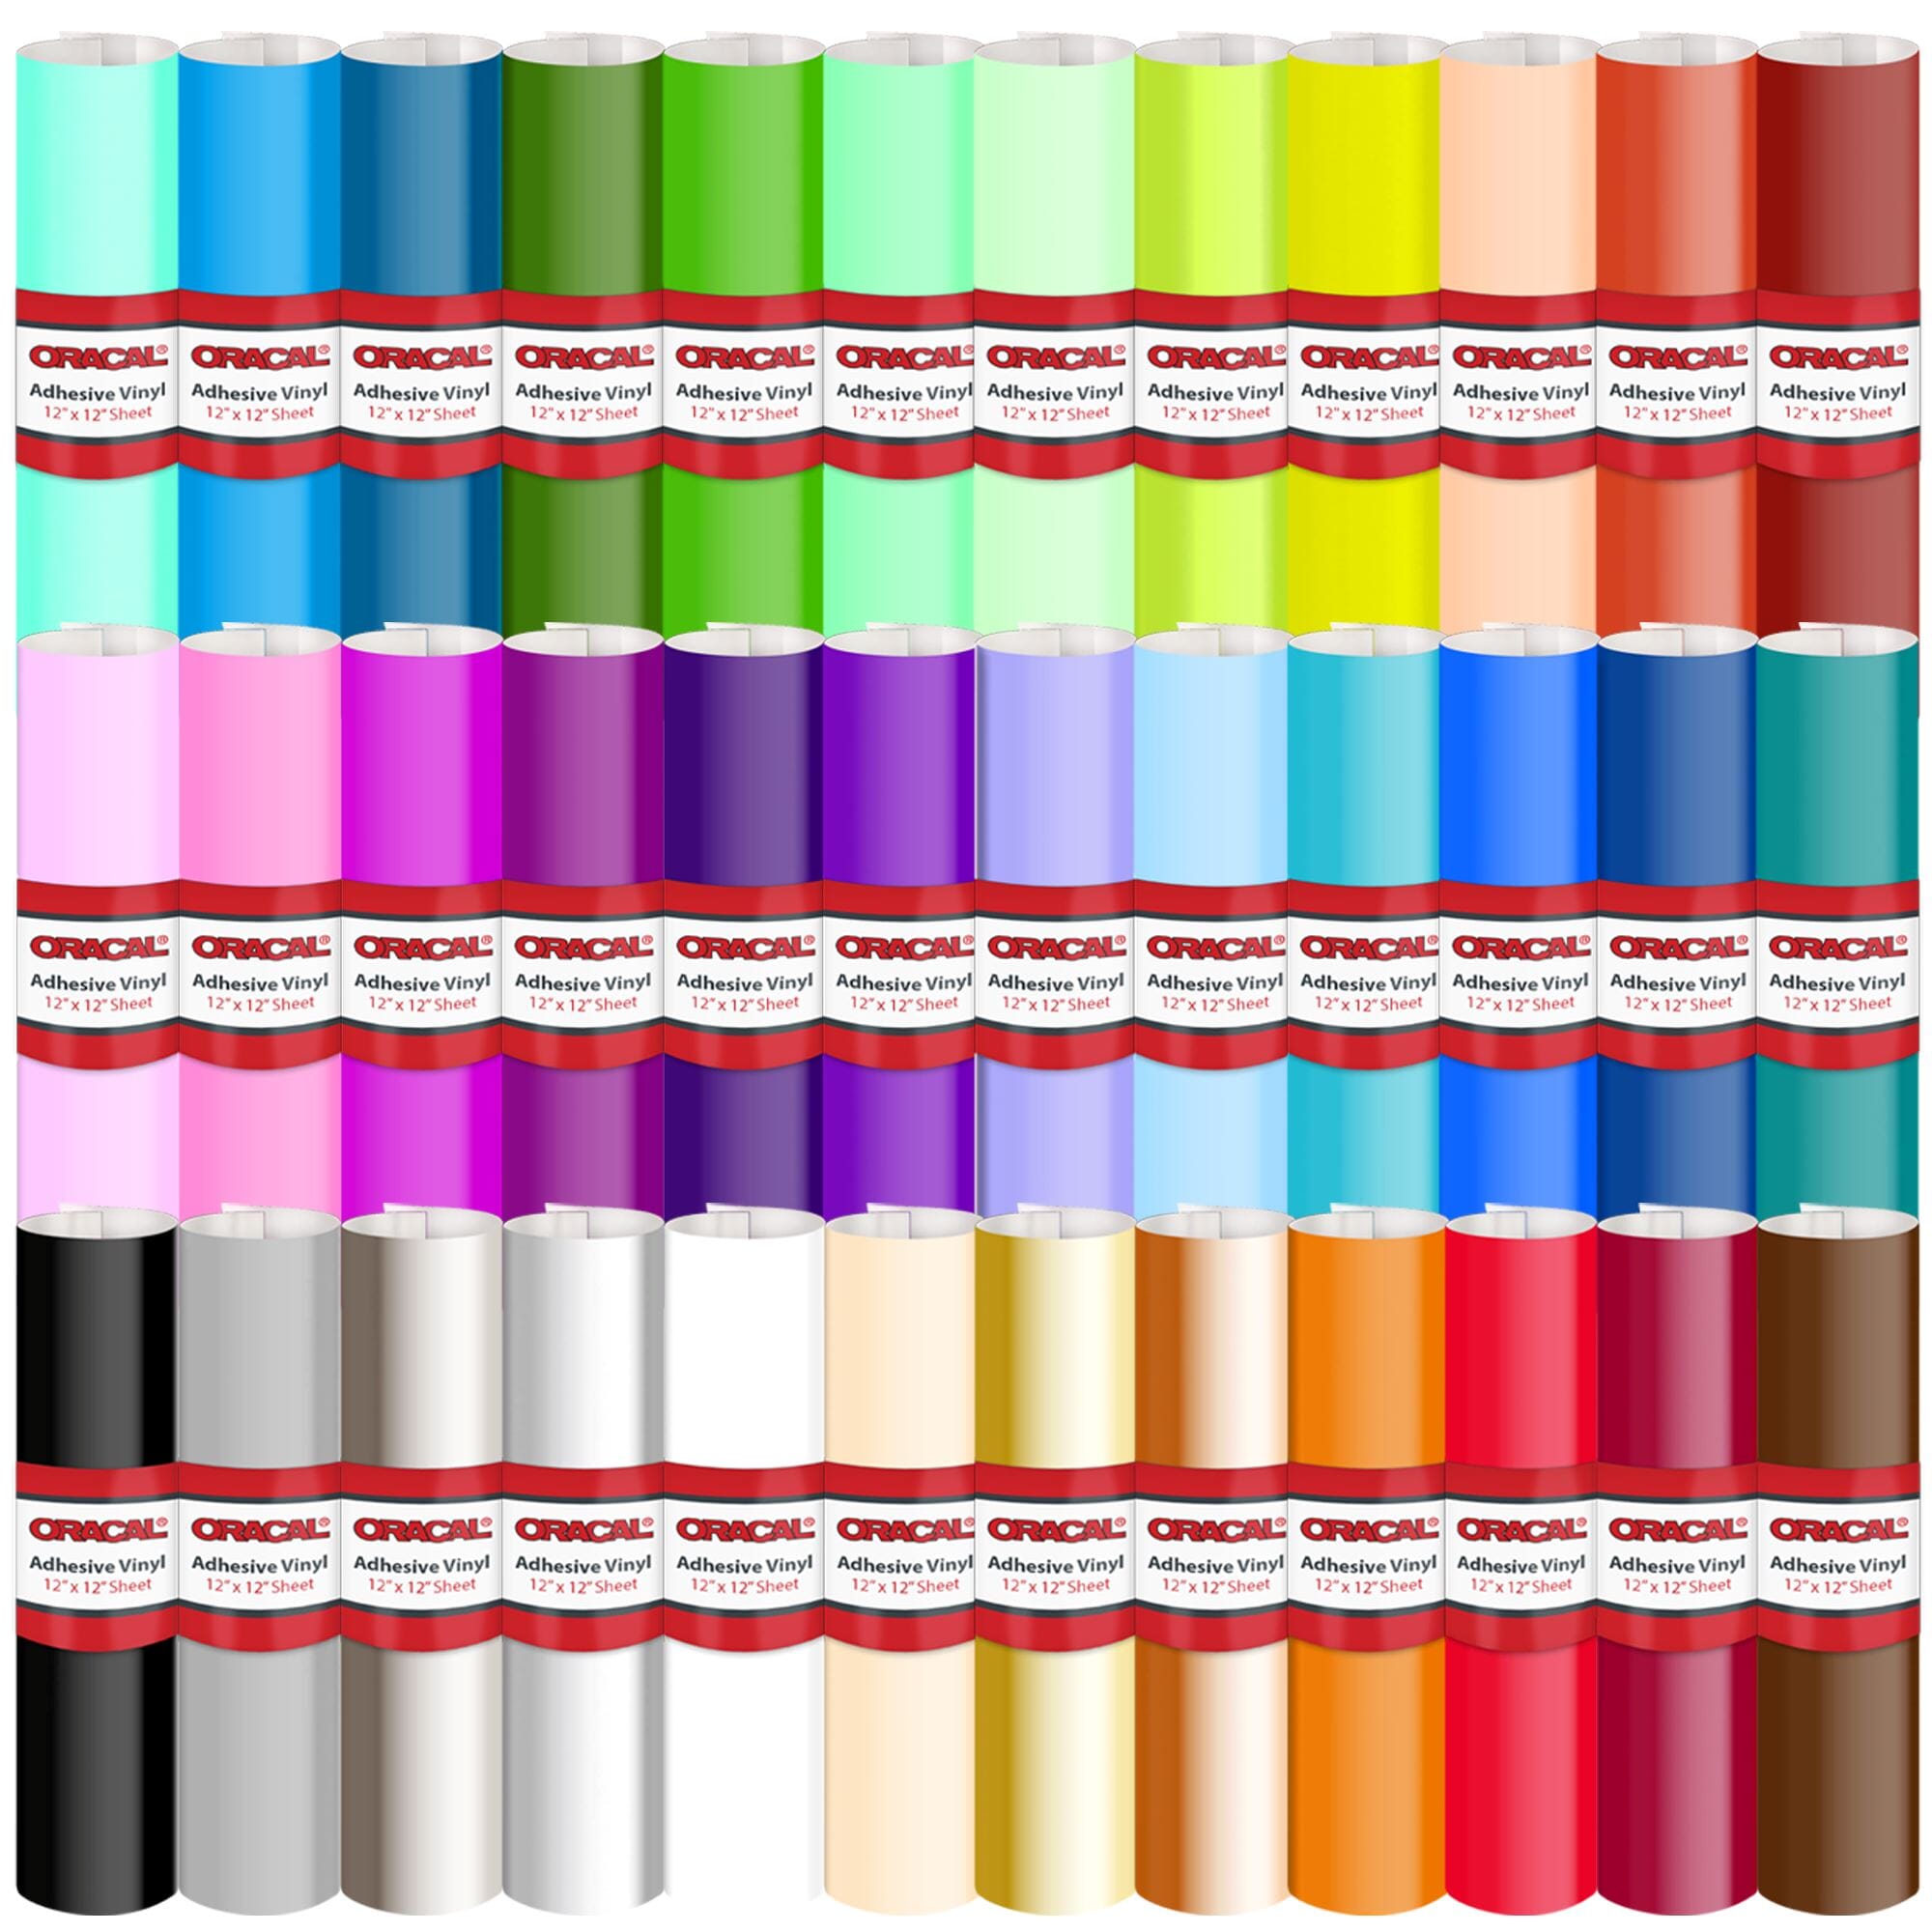 Crayola Mega Window Marker in School Colors with Stencils, 4 Count